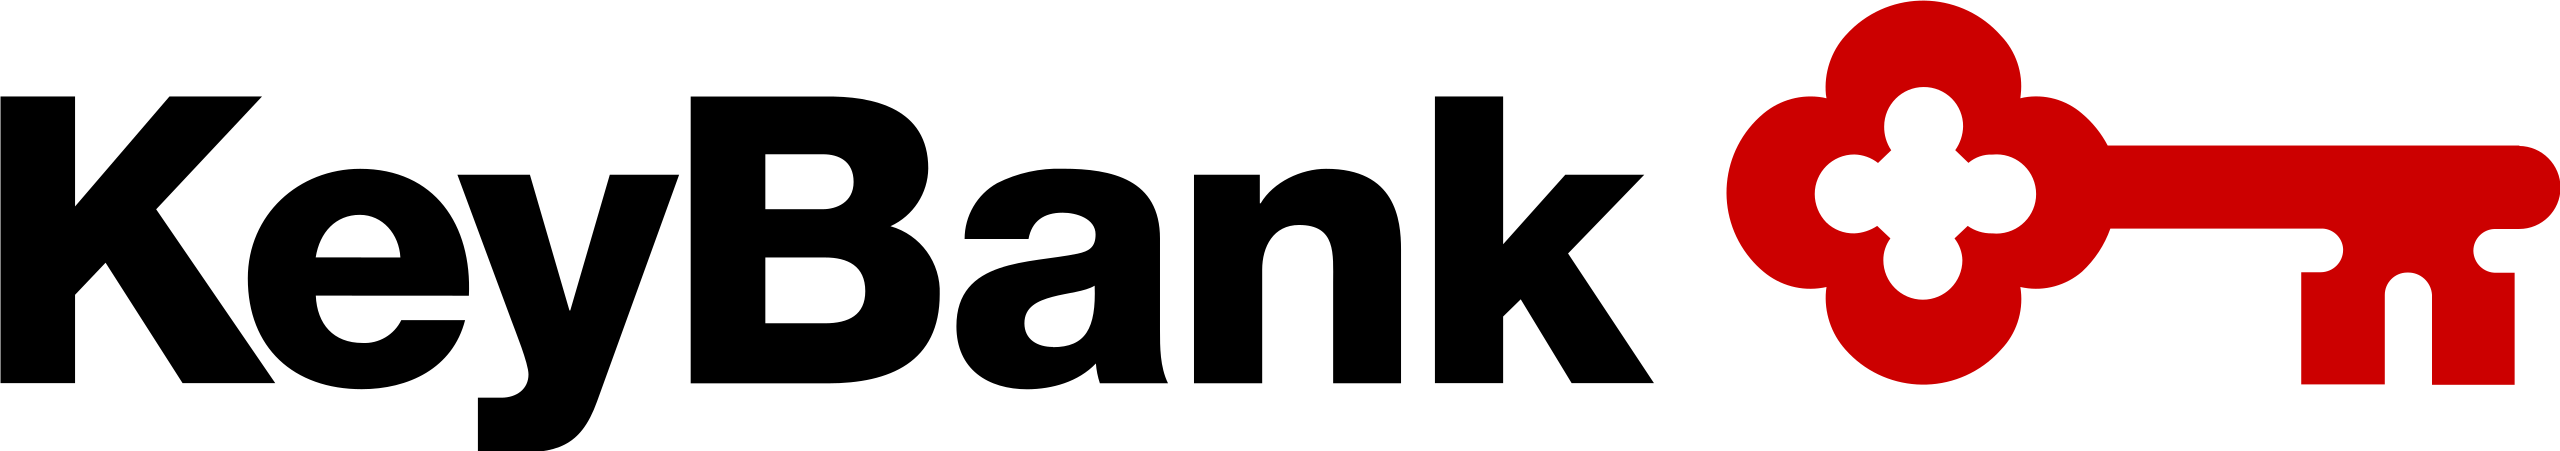 2560px-KeyBank logo.svg